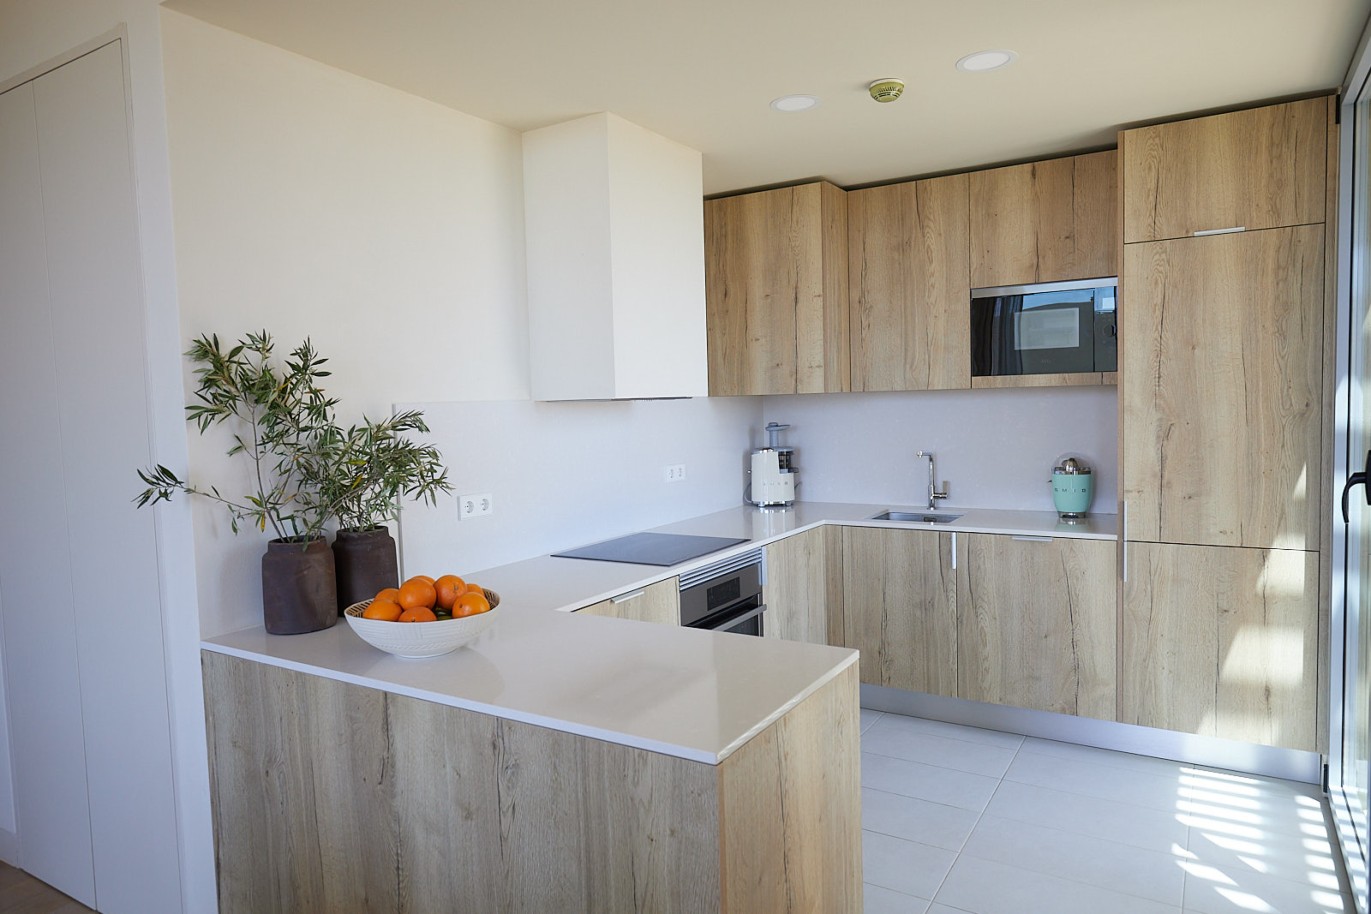 2 bedroom apartment in resort, for sale in Porches, Algarve_229162